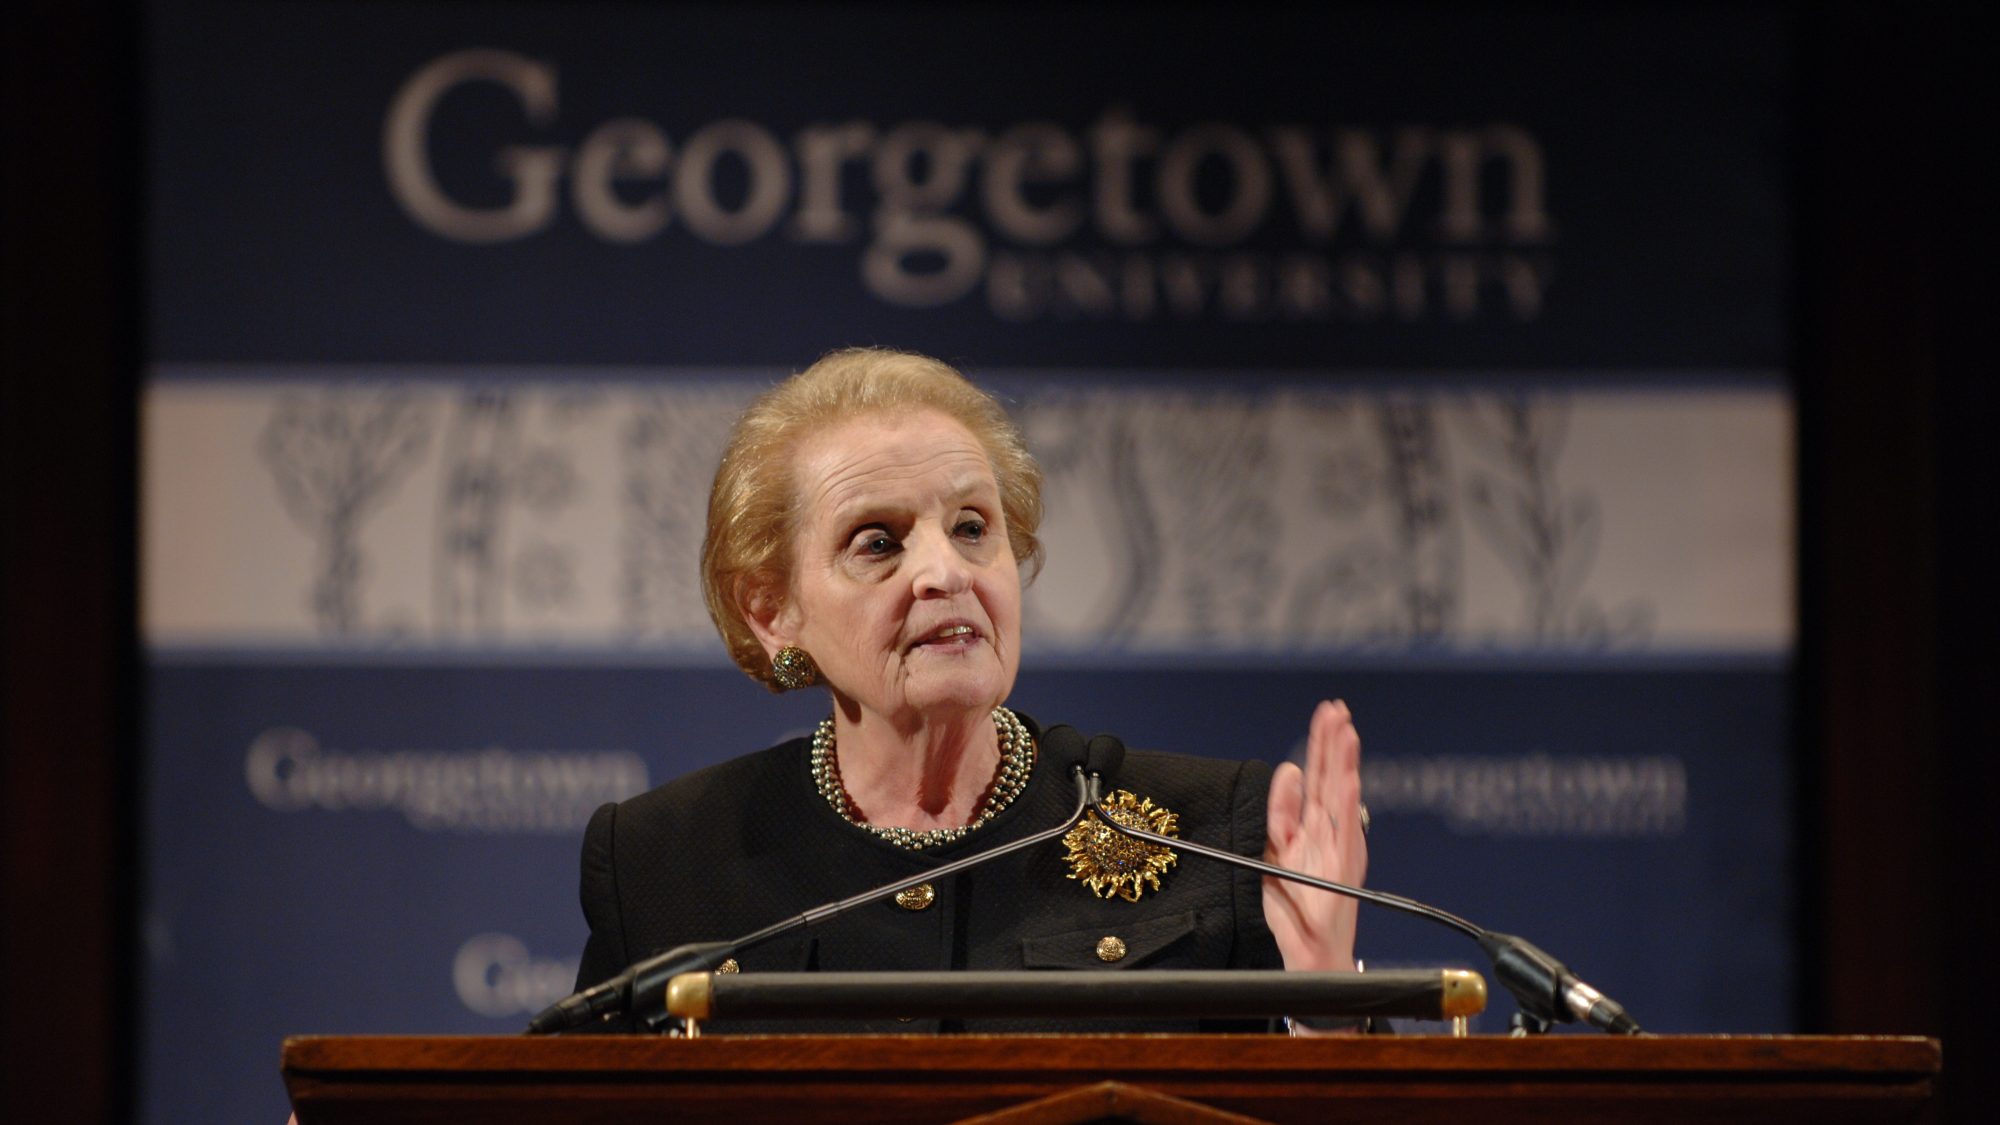 Madeleine Albright speaking from podium in front of Georgetown banner.